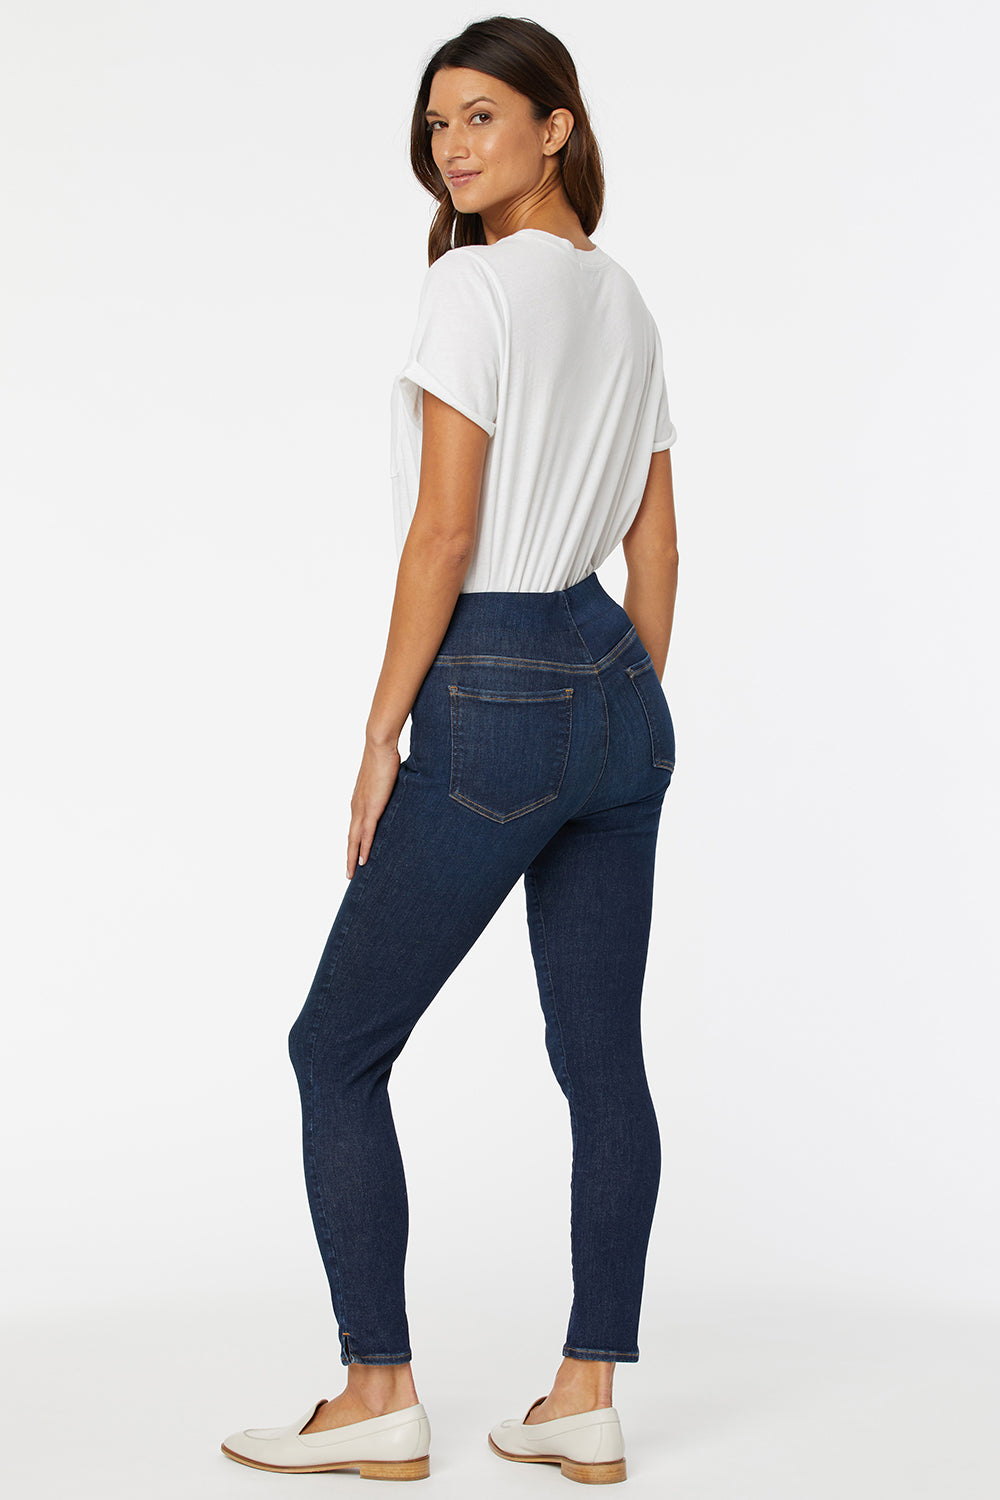 NYDJ Super Skinny Ankle Pull-On Jeans In Petite In SpanSpring™ Denim With Side Slits - Clean Vista